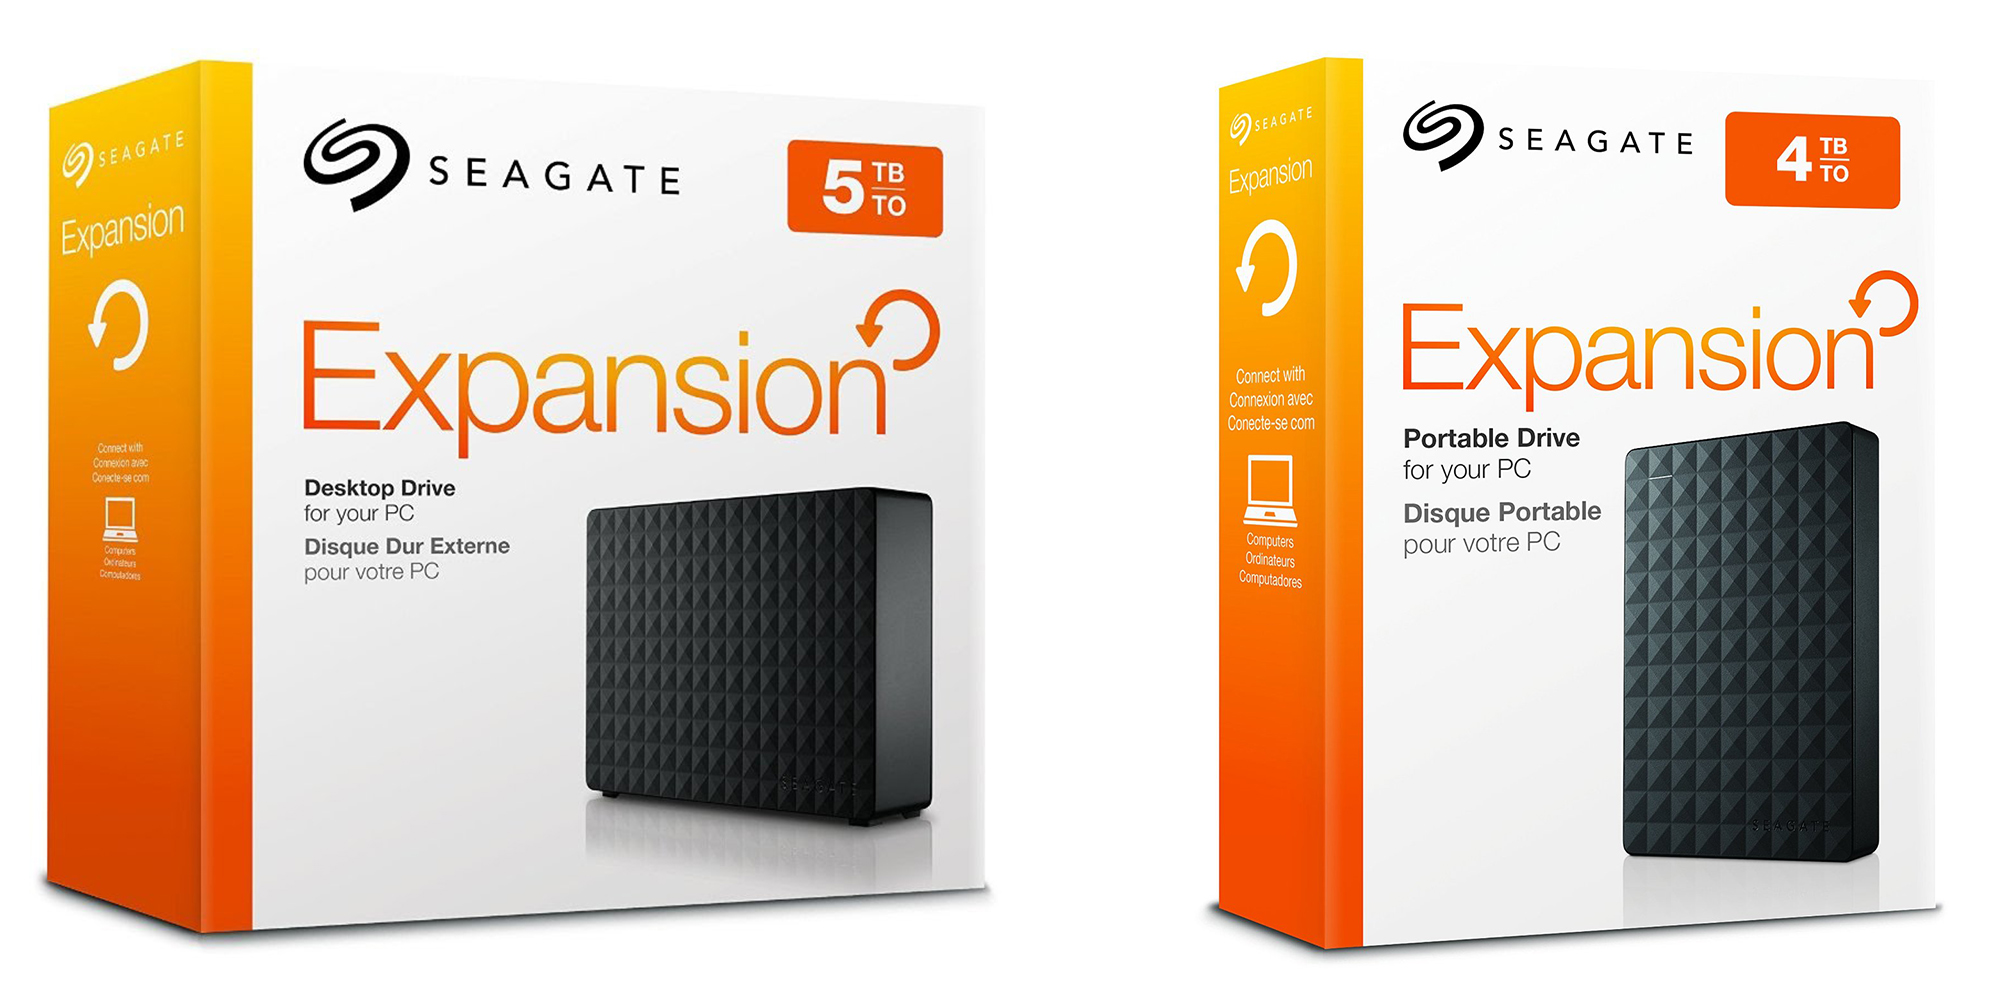 seagate expansion 5tb desktop external hard drive usb 3.0 for mac